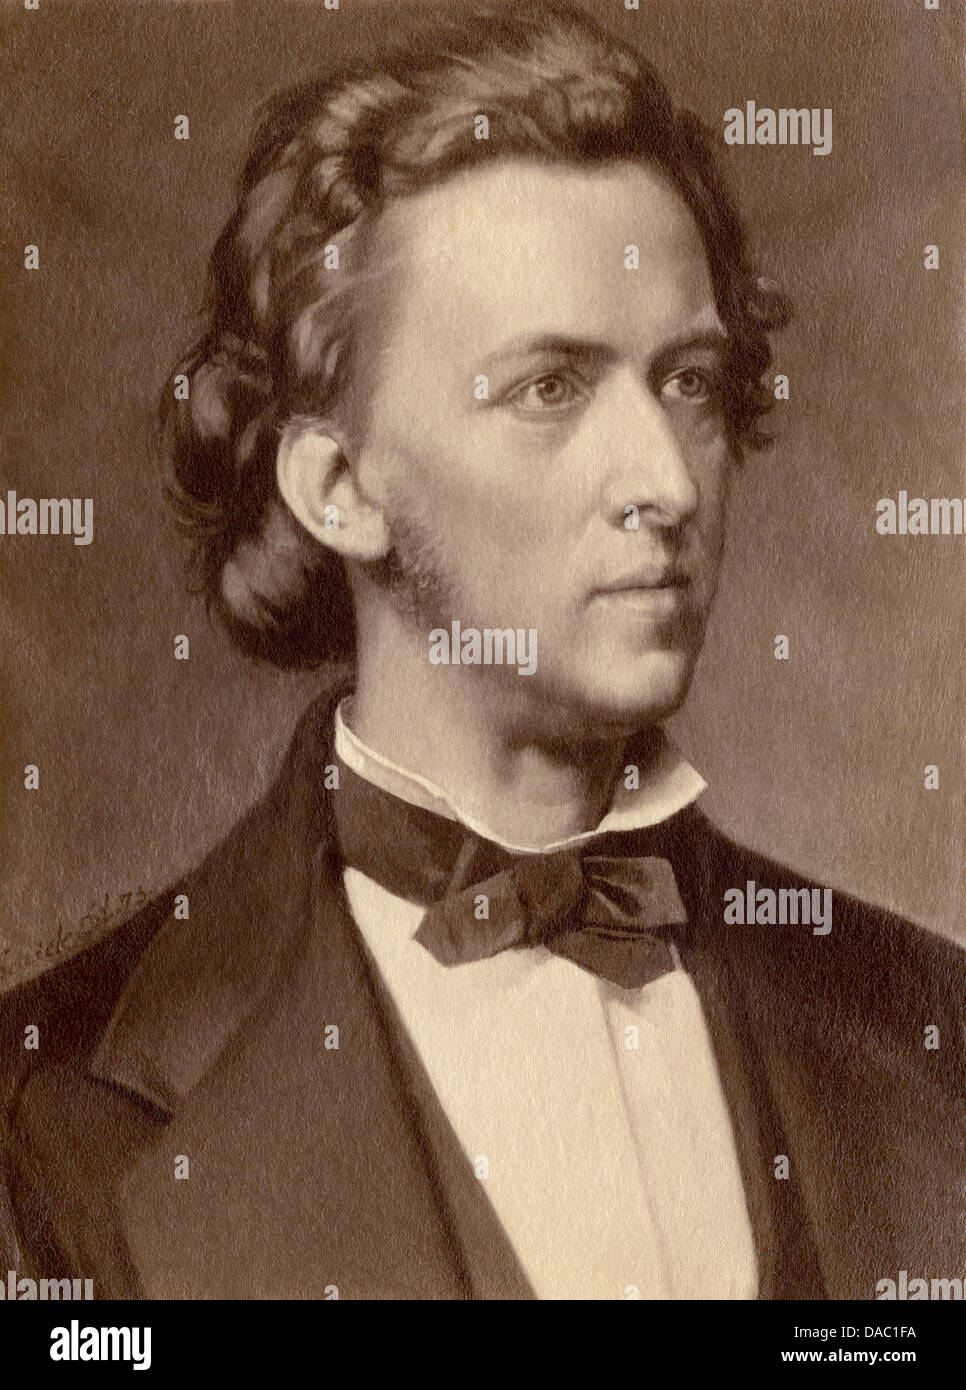 Komponist und Pianist Frédéric Chopin. Foto Stockfoto